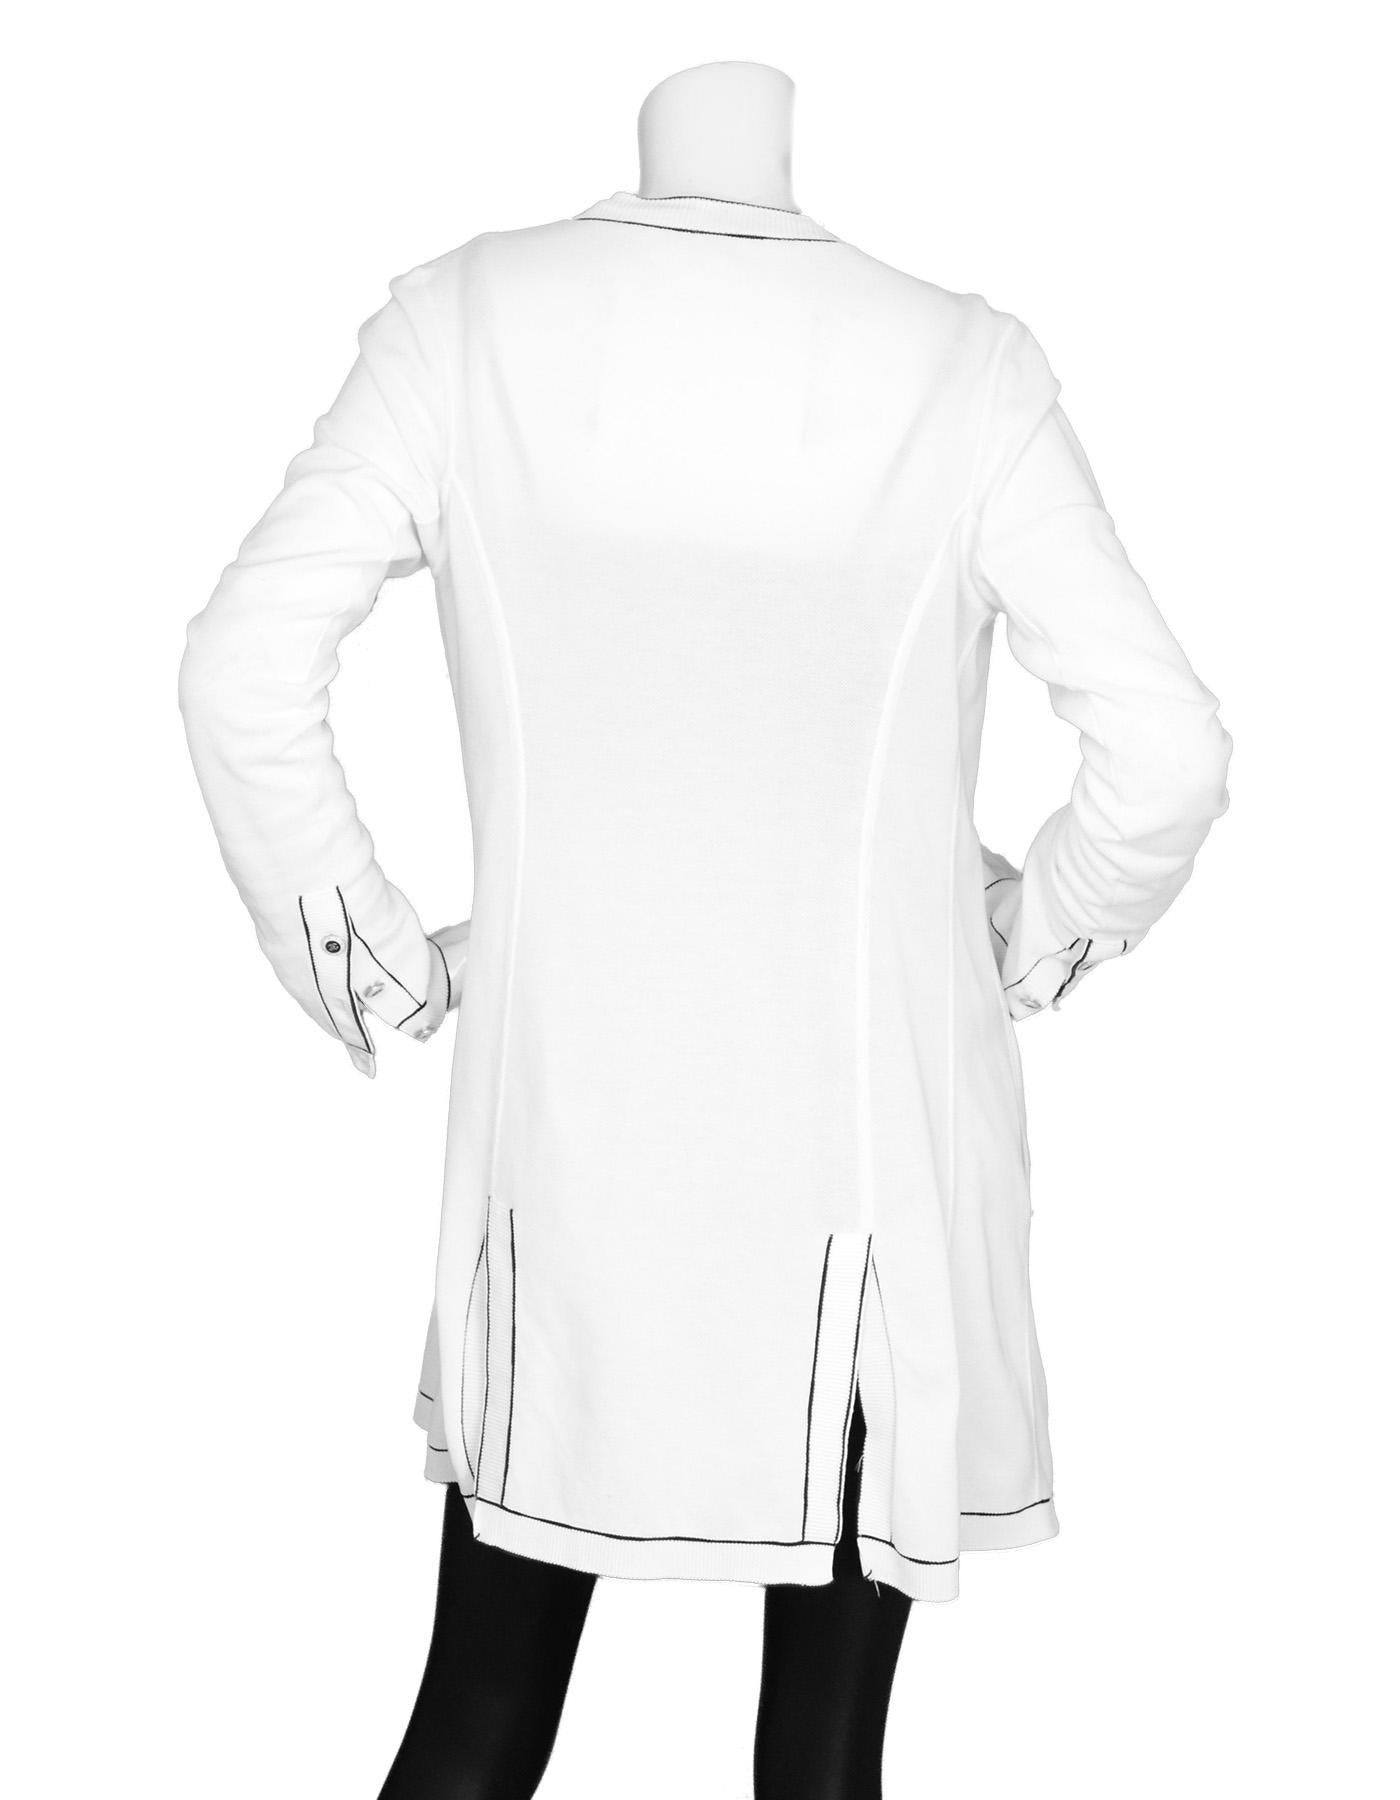 white cardigan with black trim